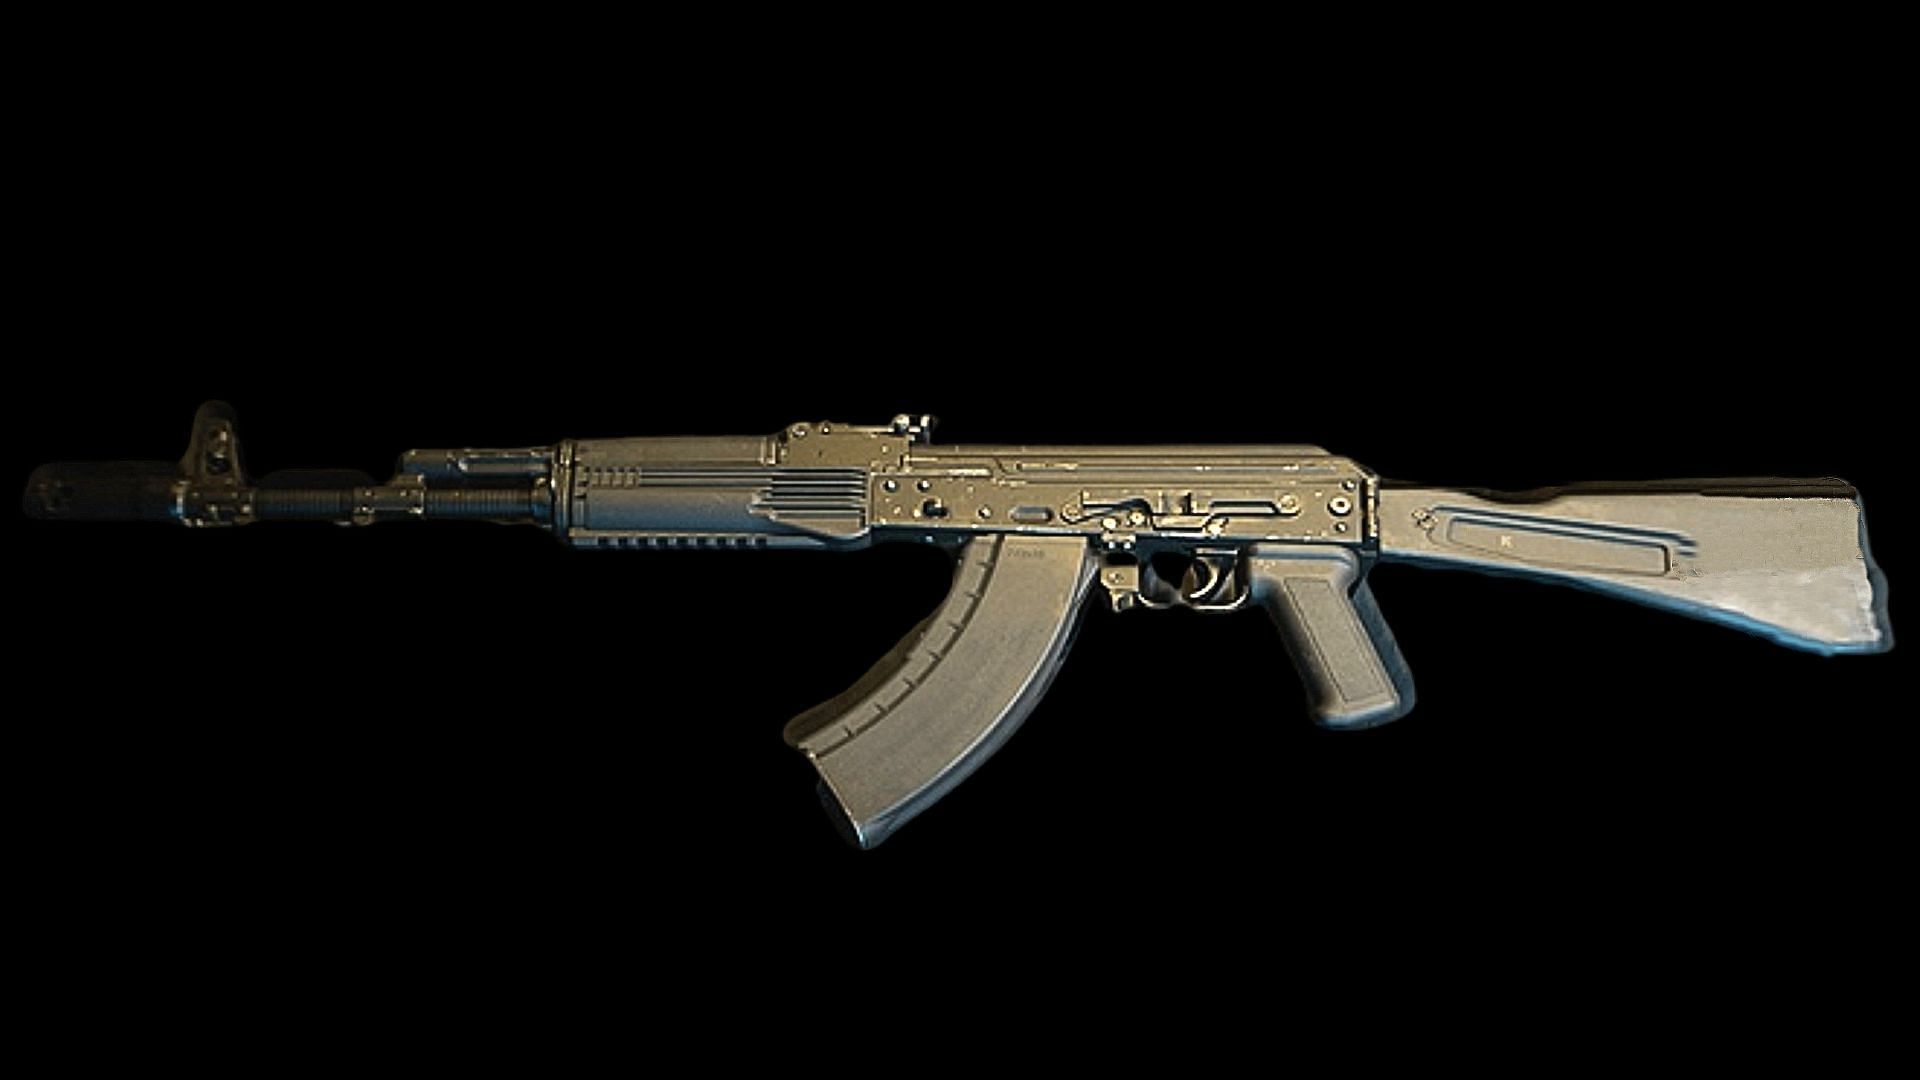 The Kastov 762 Assault Rifle in Modern Warfare 2 (Image via Activision)